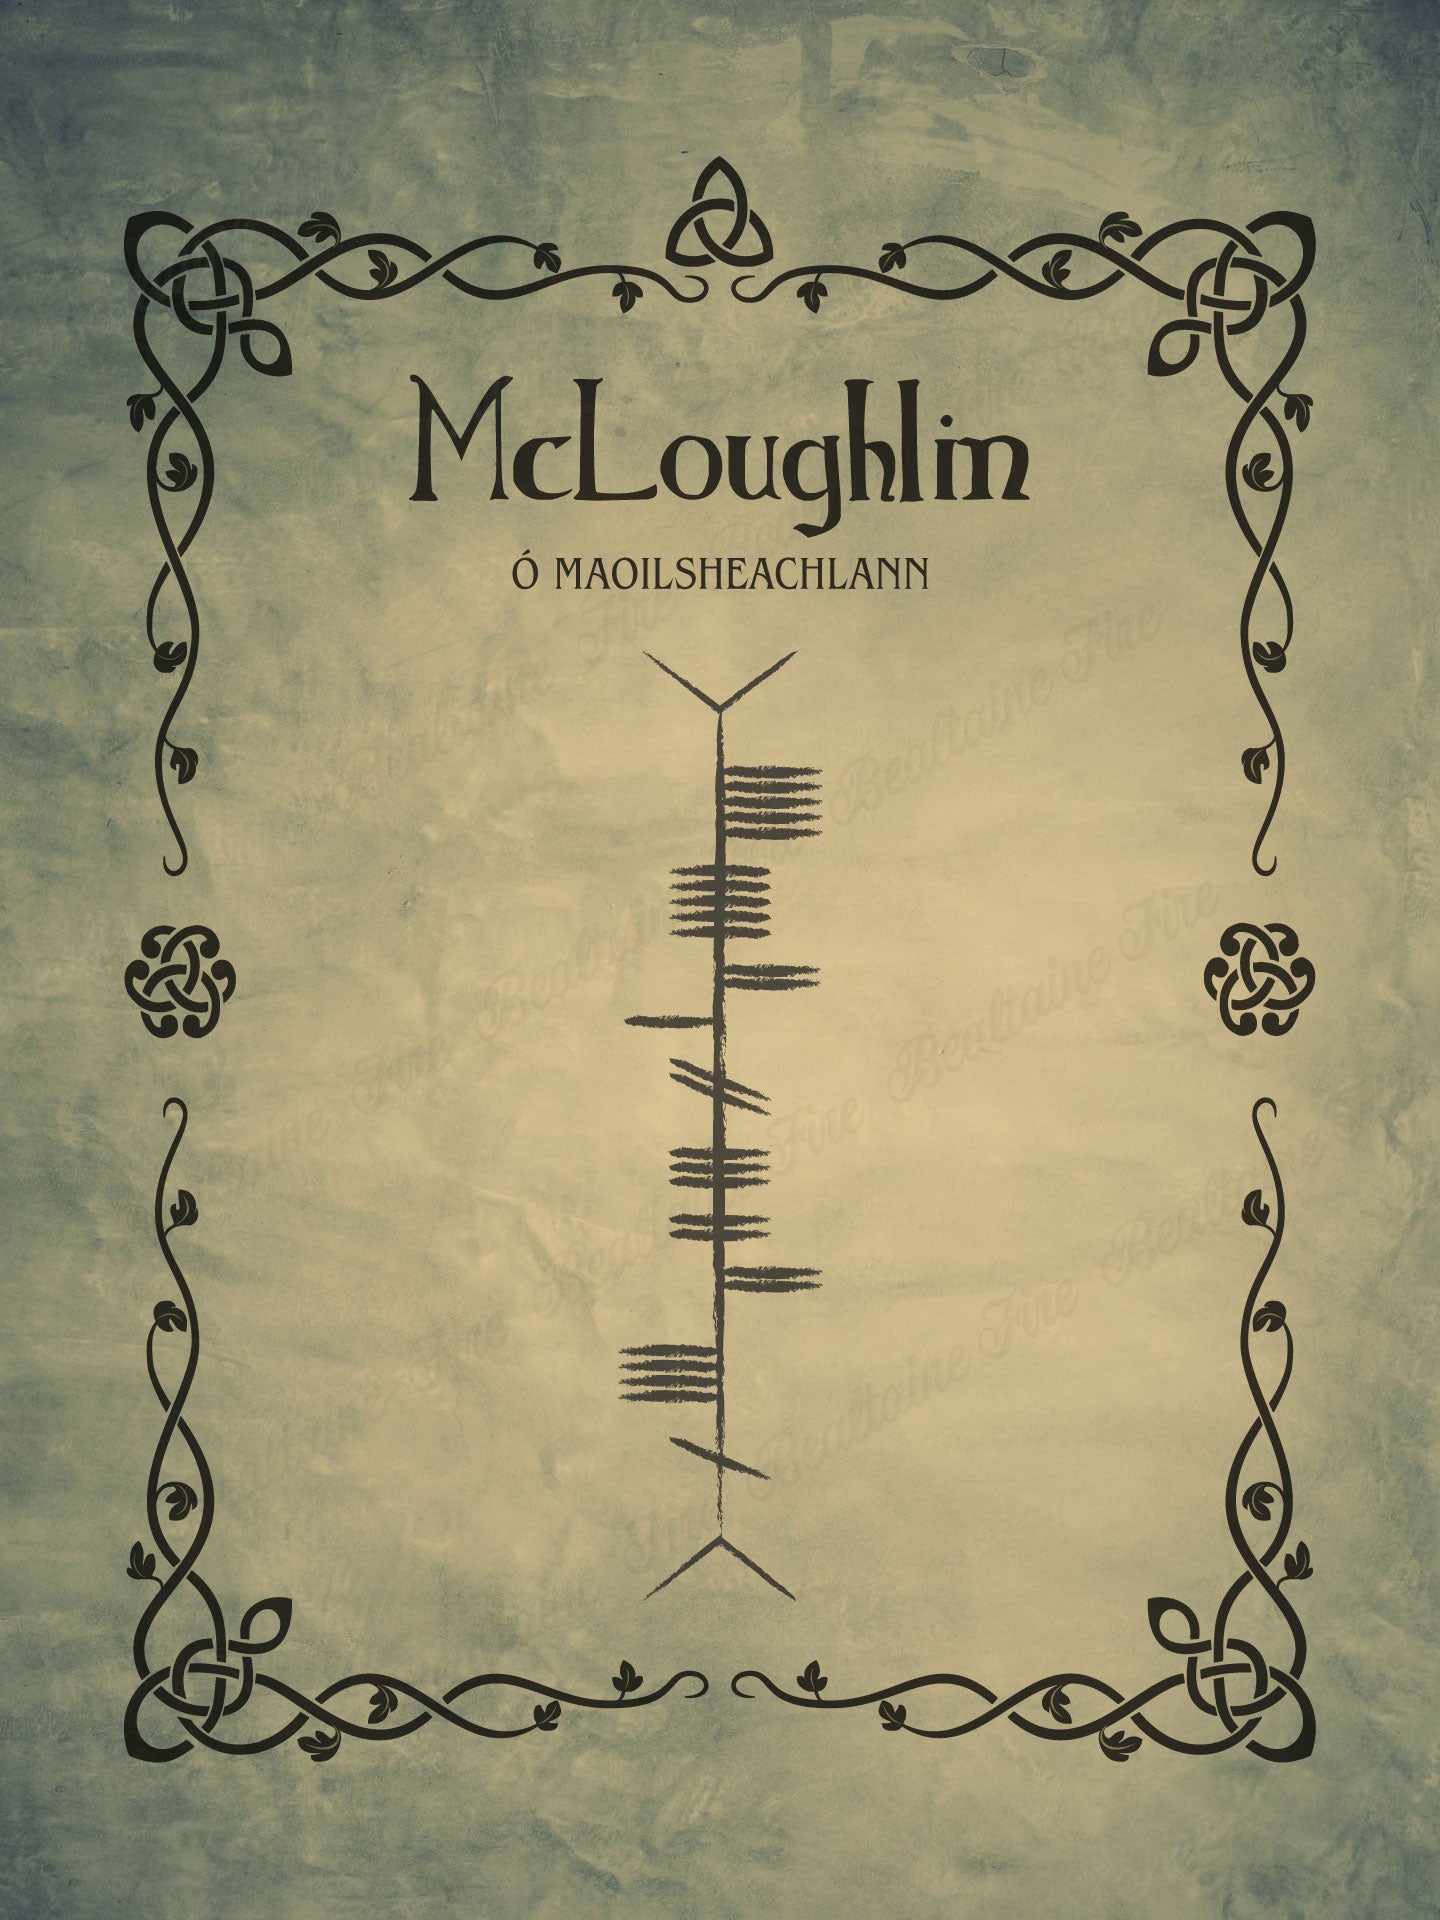 McLoughlin (Co Meath Clan) in Ogham premium luster unframed print